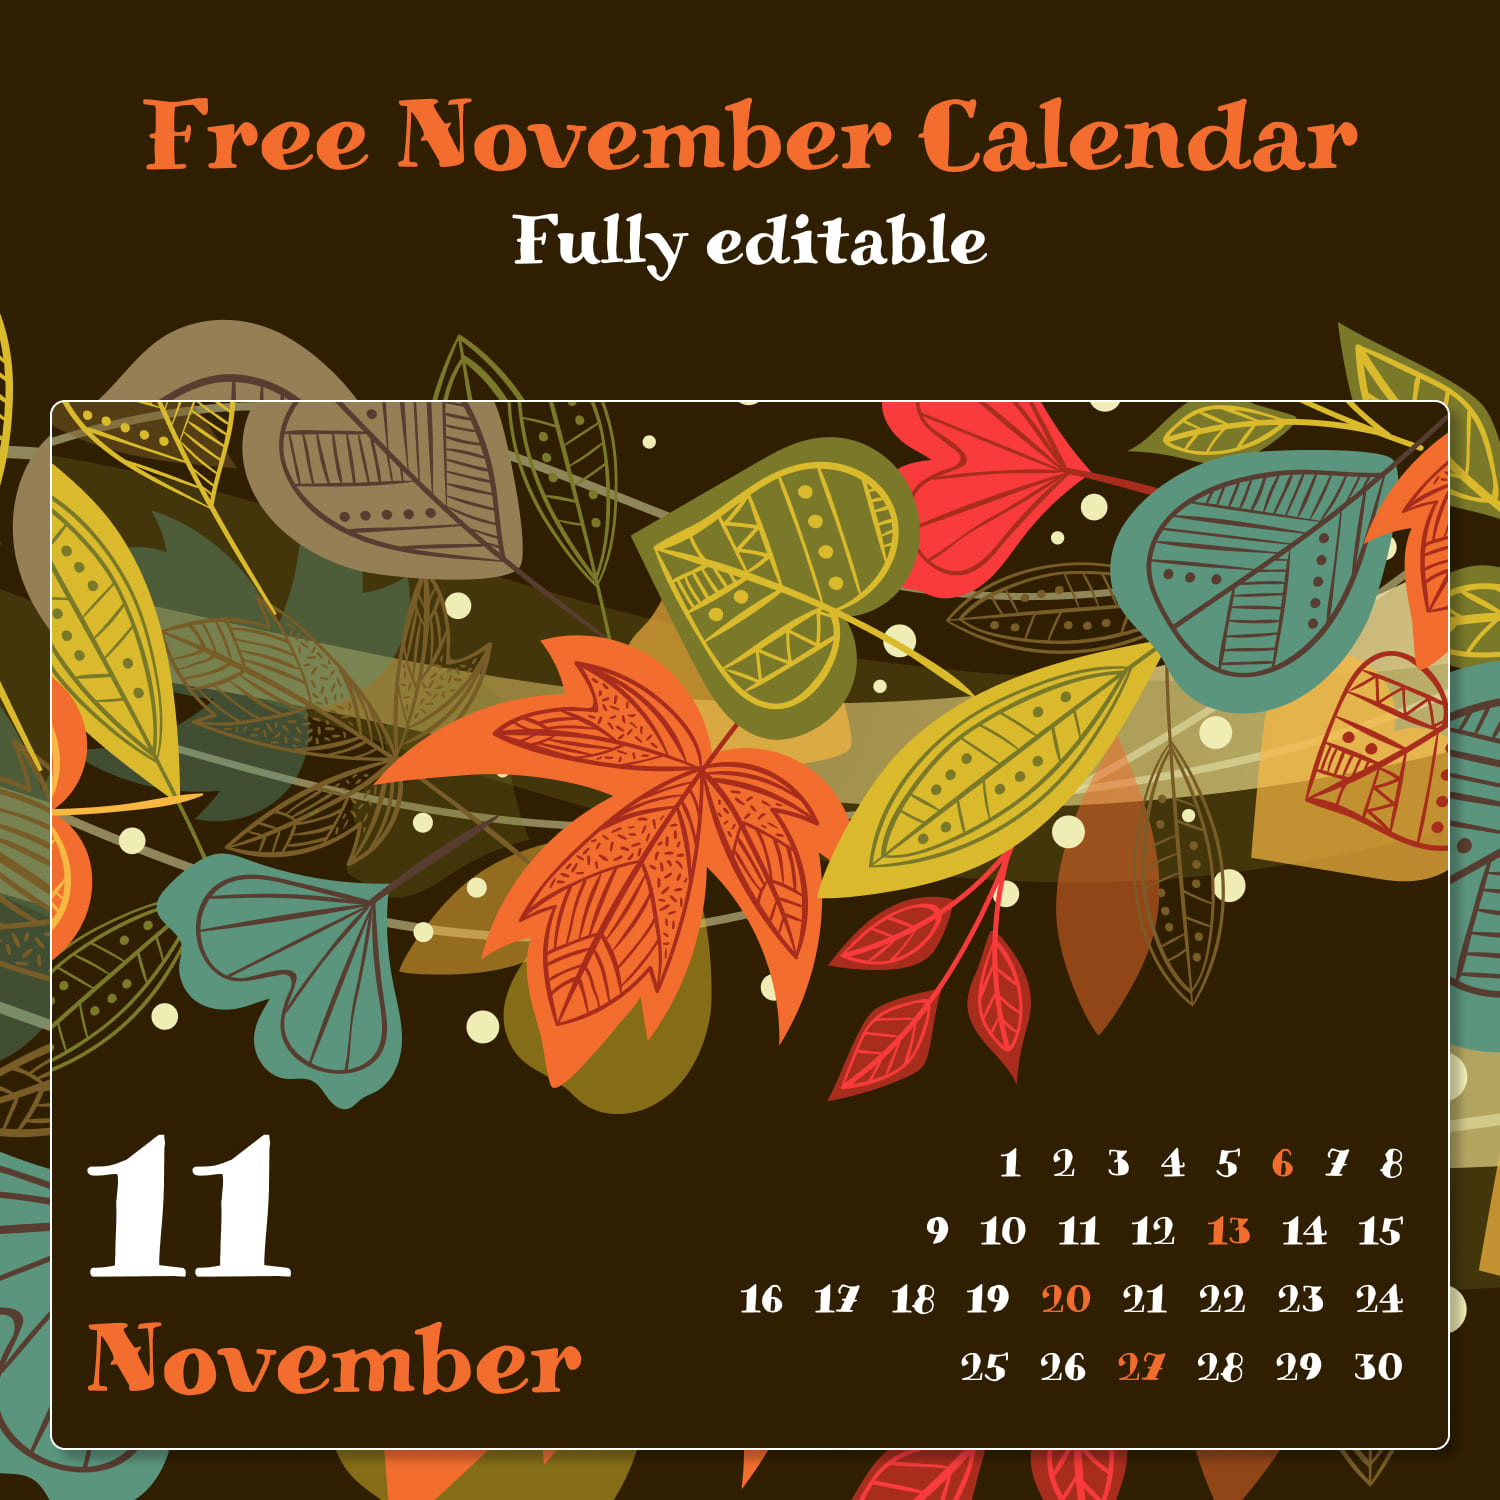 November calendar, fully editable, title picture.